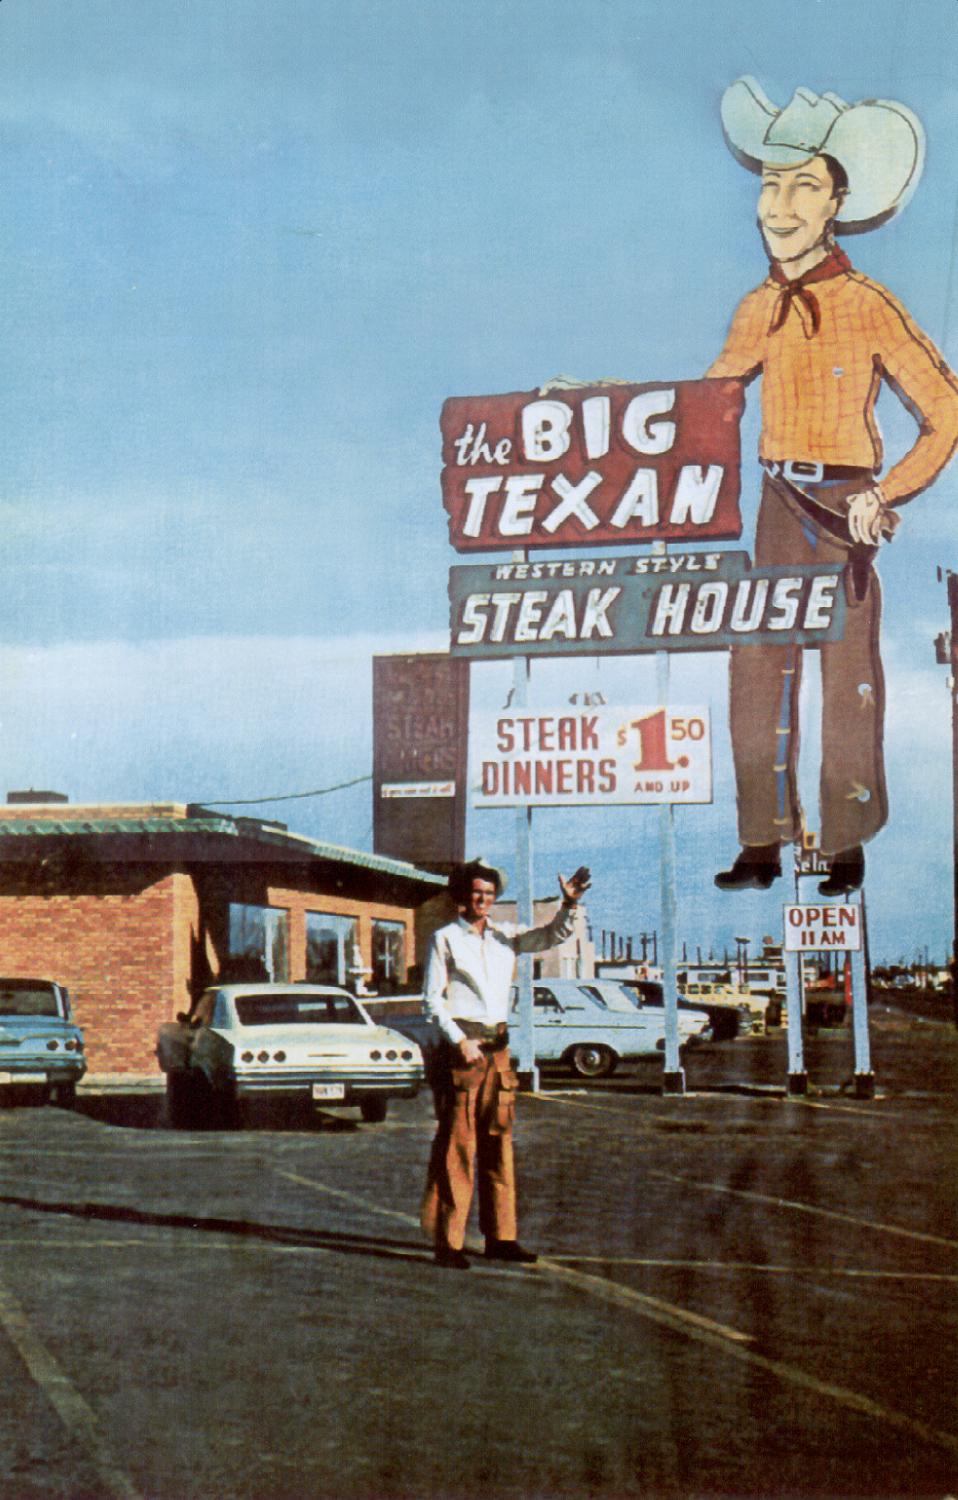 Big Texan Cowboy - The Big Texan Steak Ranch